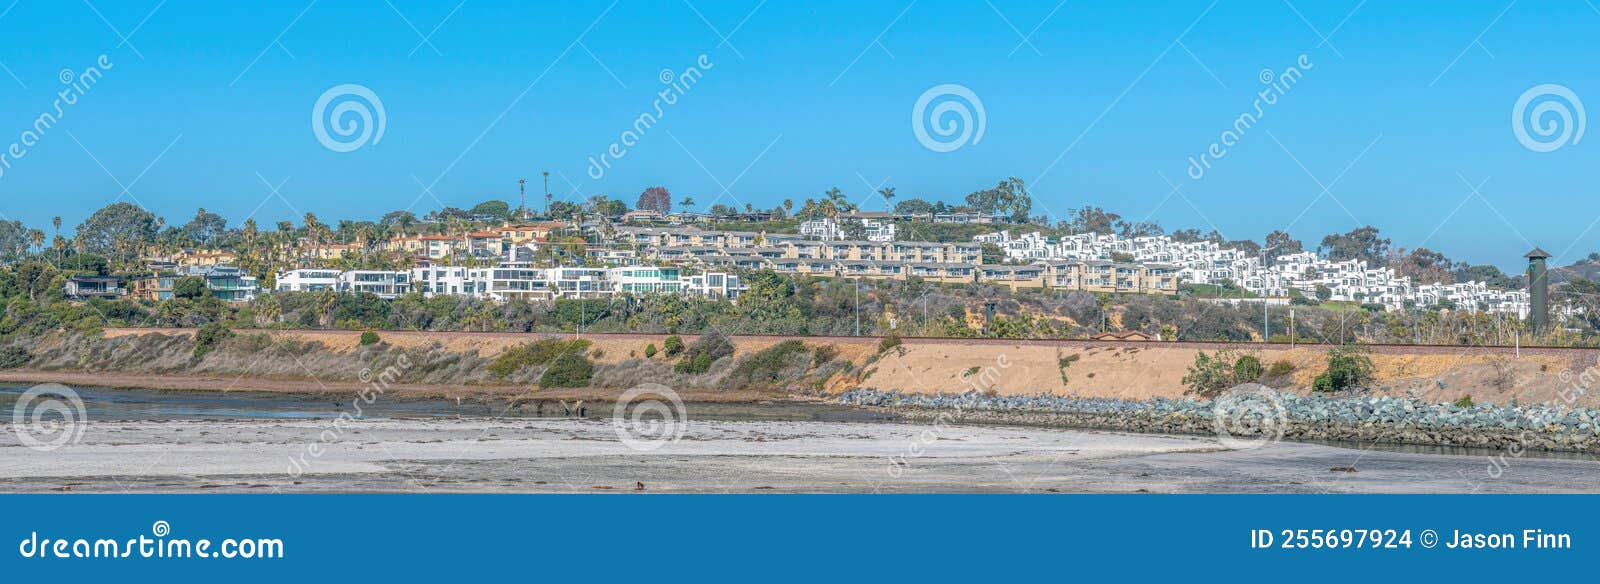 del mar, california- panorama of apartments and houses along the san dieguito lagoon